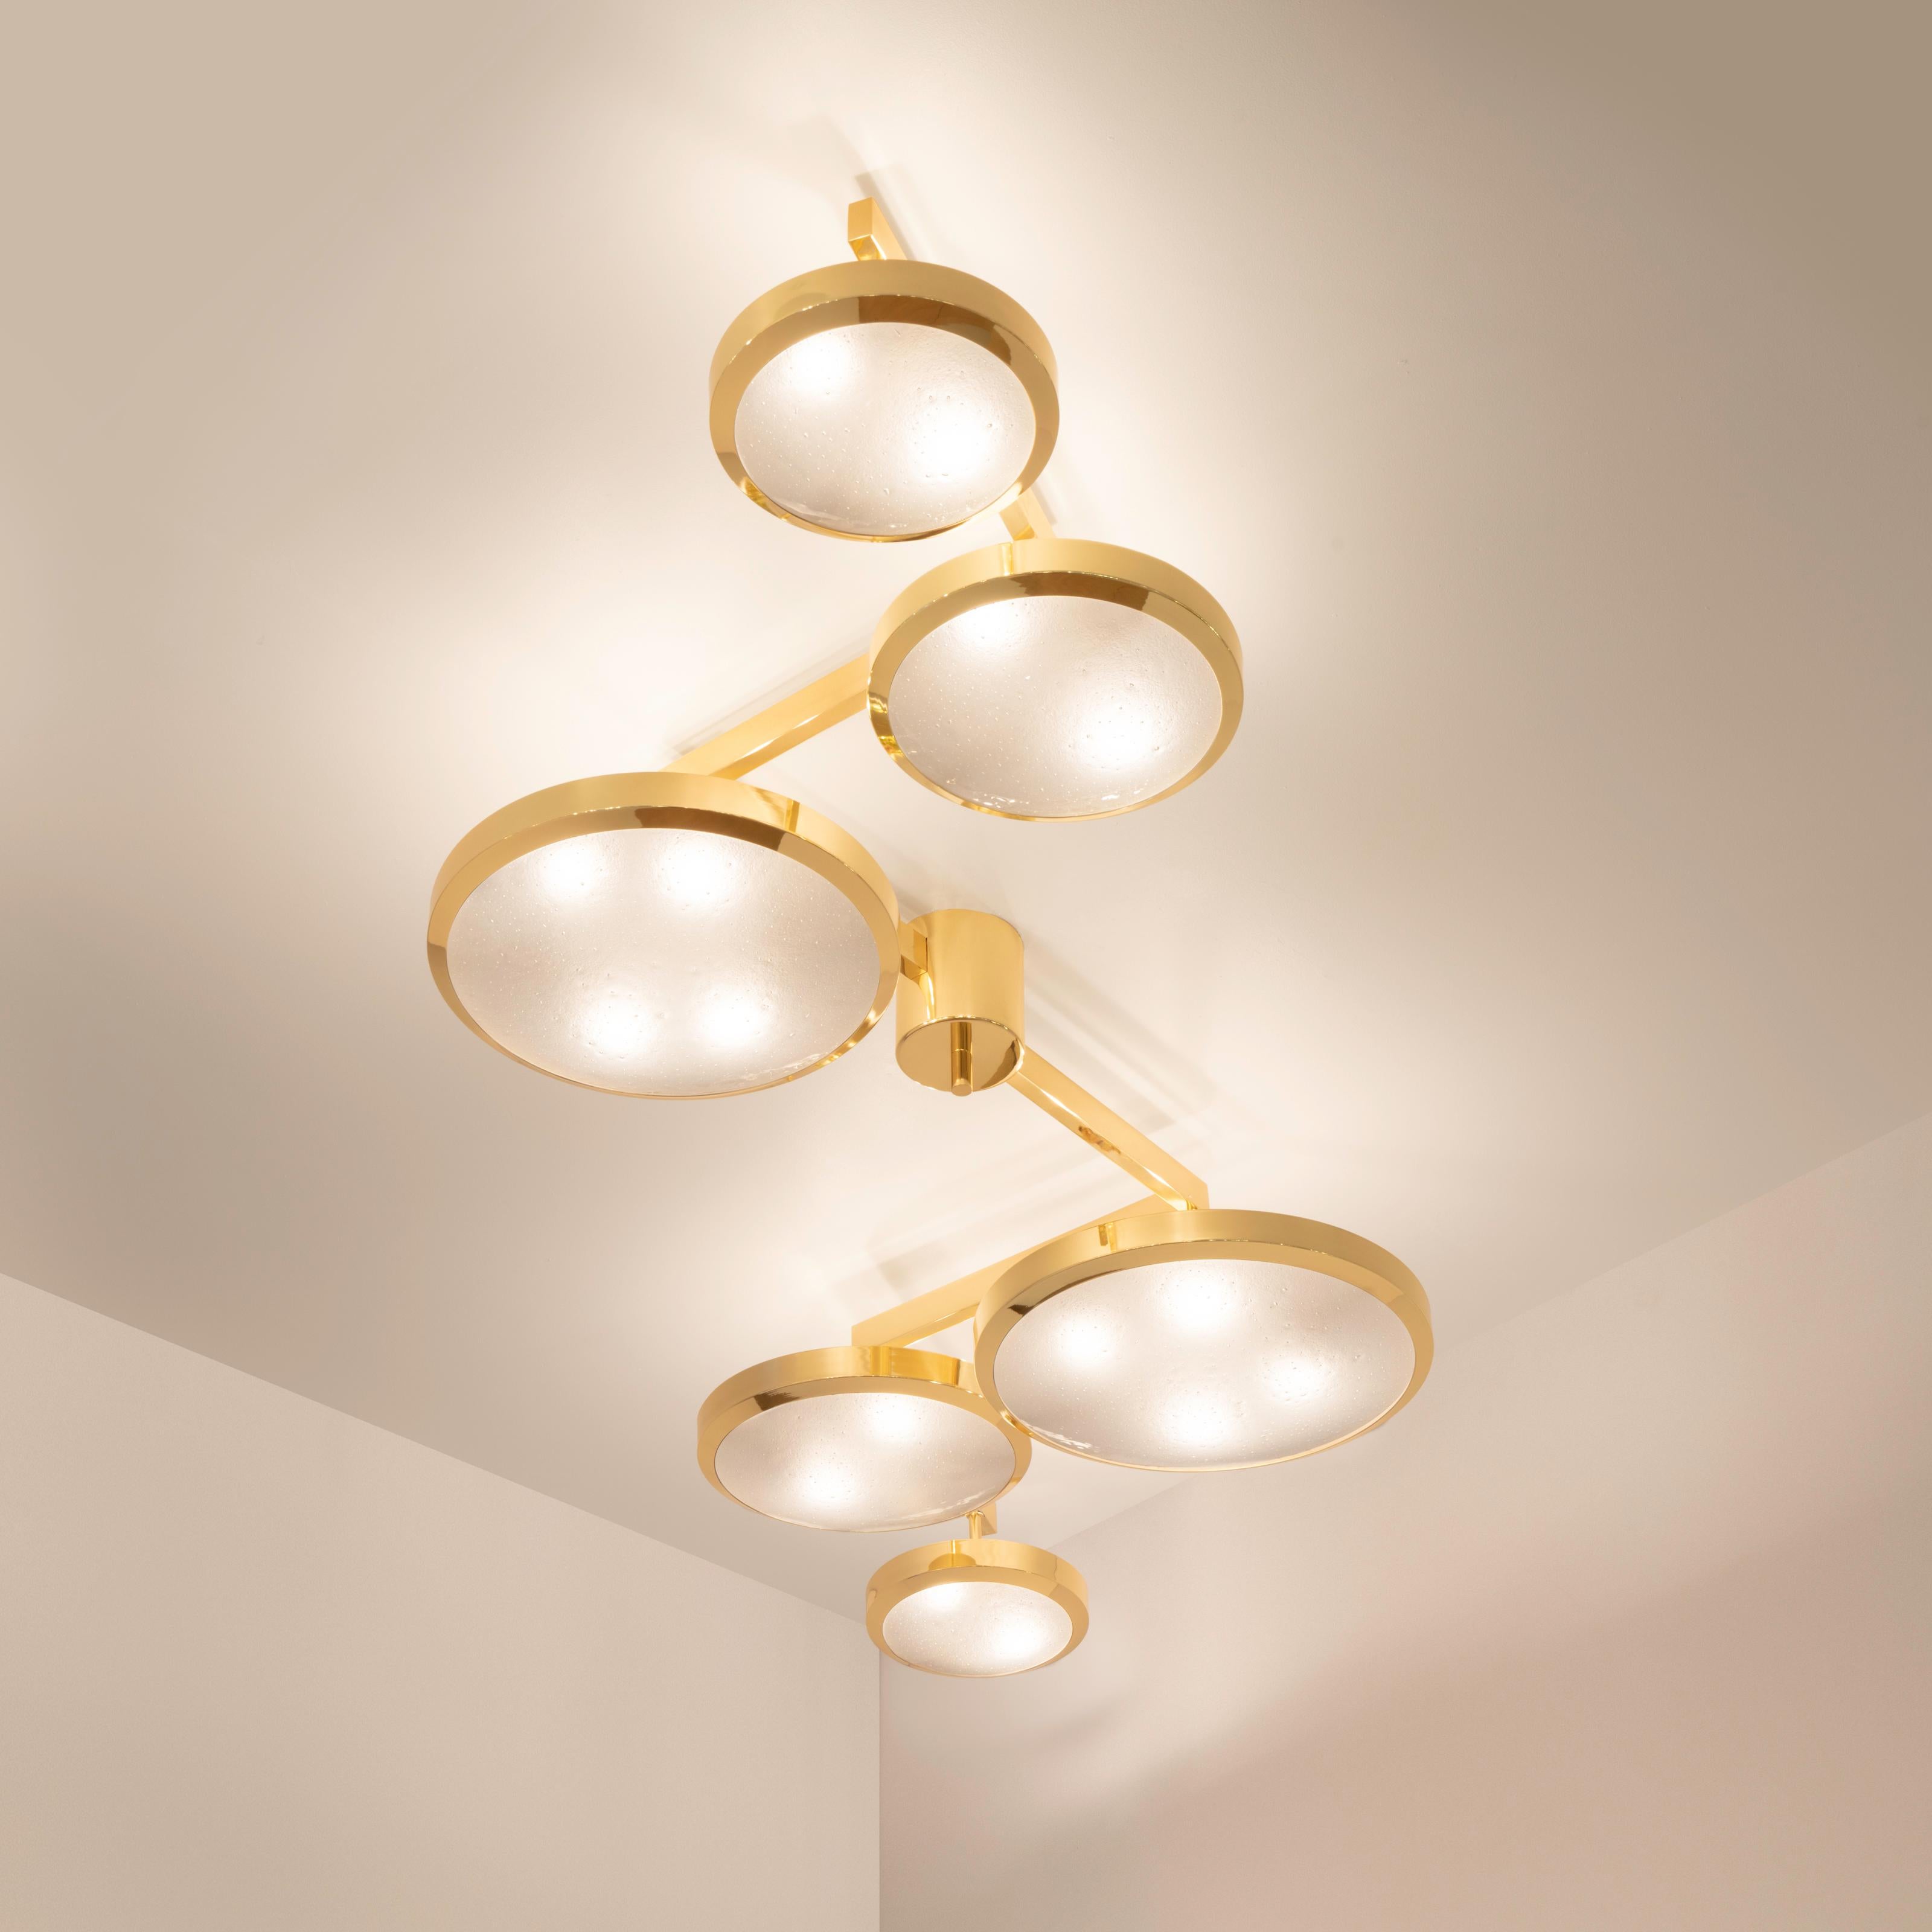 Modern Geometria Sospesa Ceiling Light by Gaspare Asaro - Polished Brass For Sale